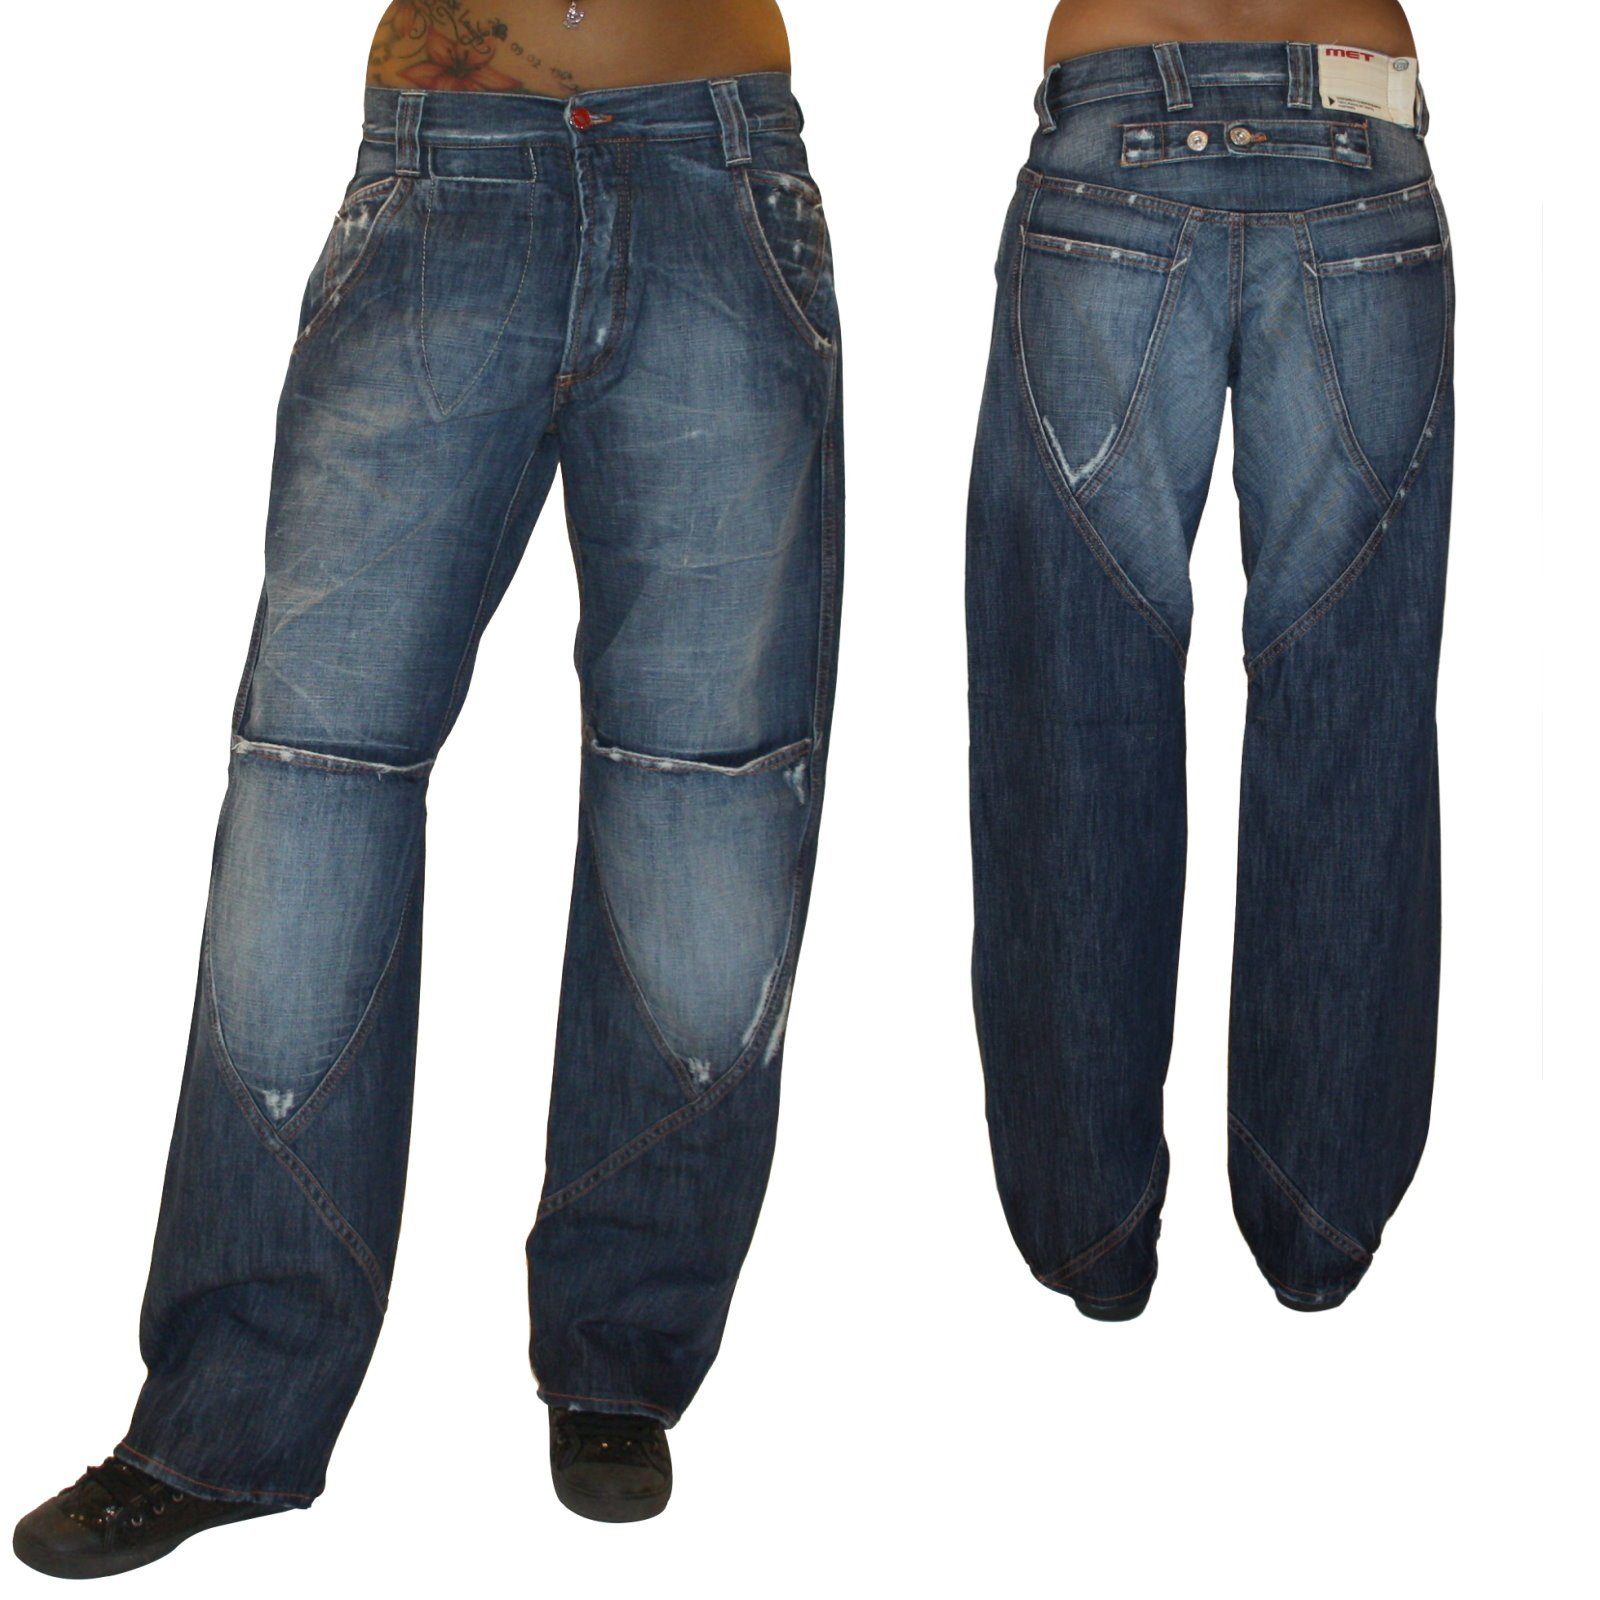 MET Jeans Boyfriend-Jeans »Pantaloni« Damen Jeans Jeanshose Baggy Hip Hop  Hose dunkelblau Used online kaufen | OTTO